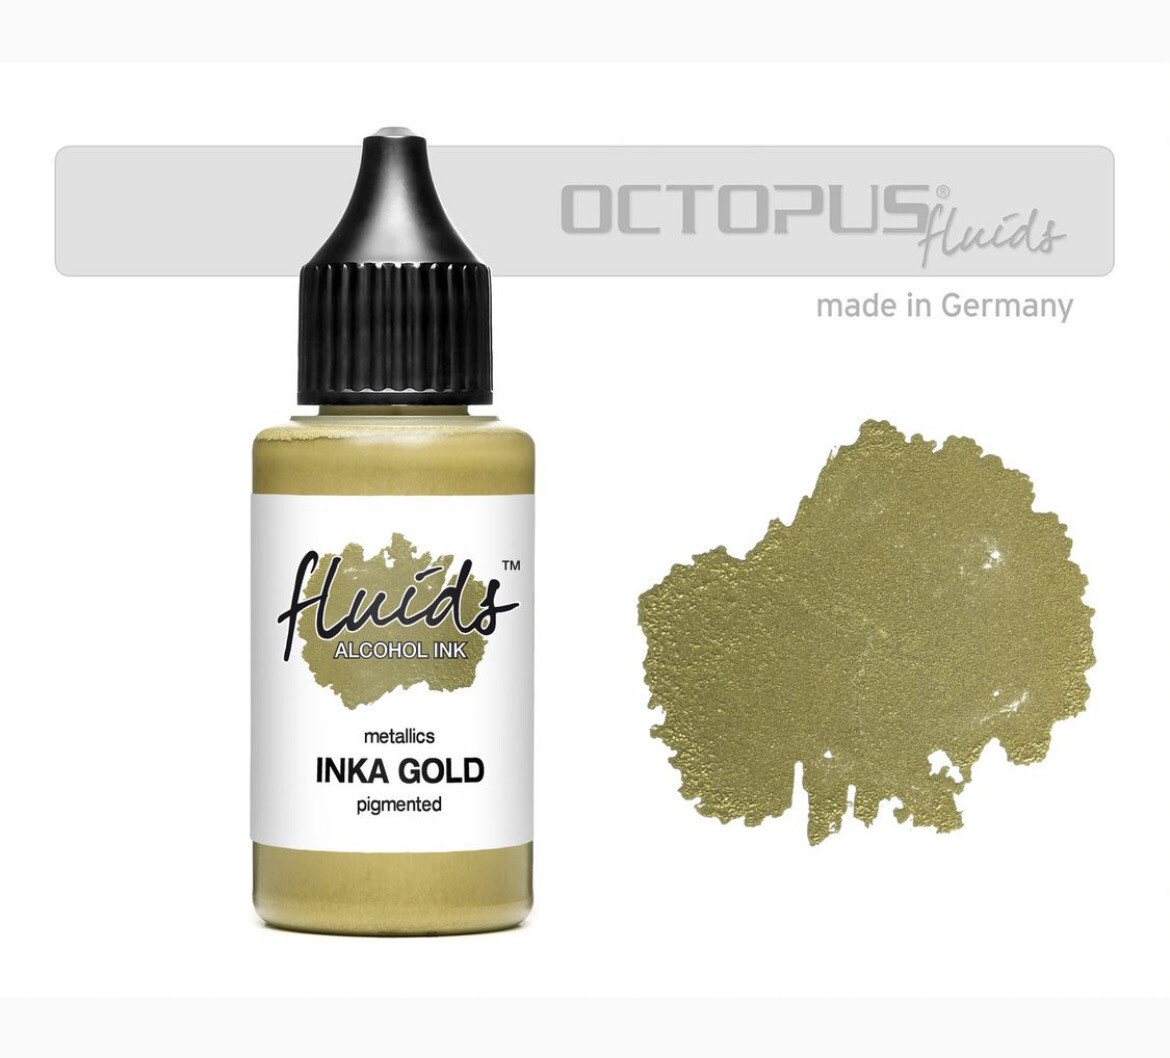 Inka Gold Alcohol Ink (metallic) 1oz